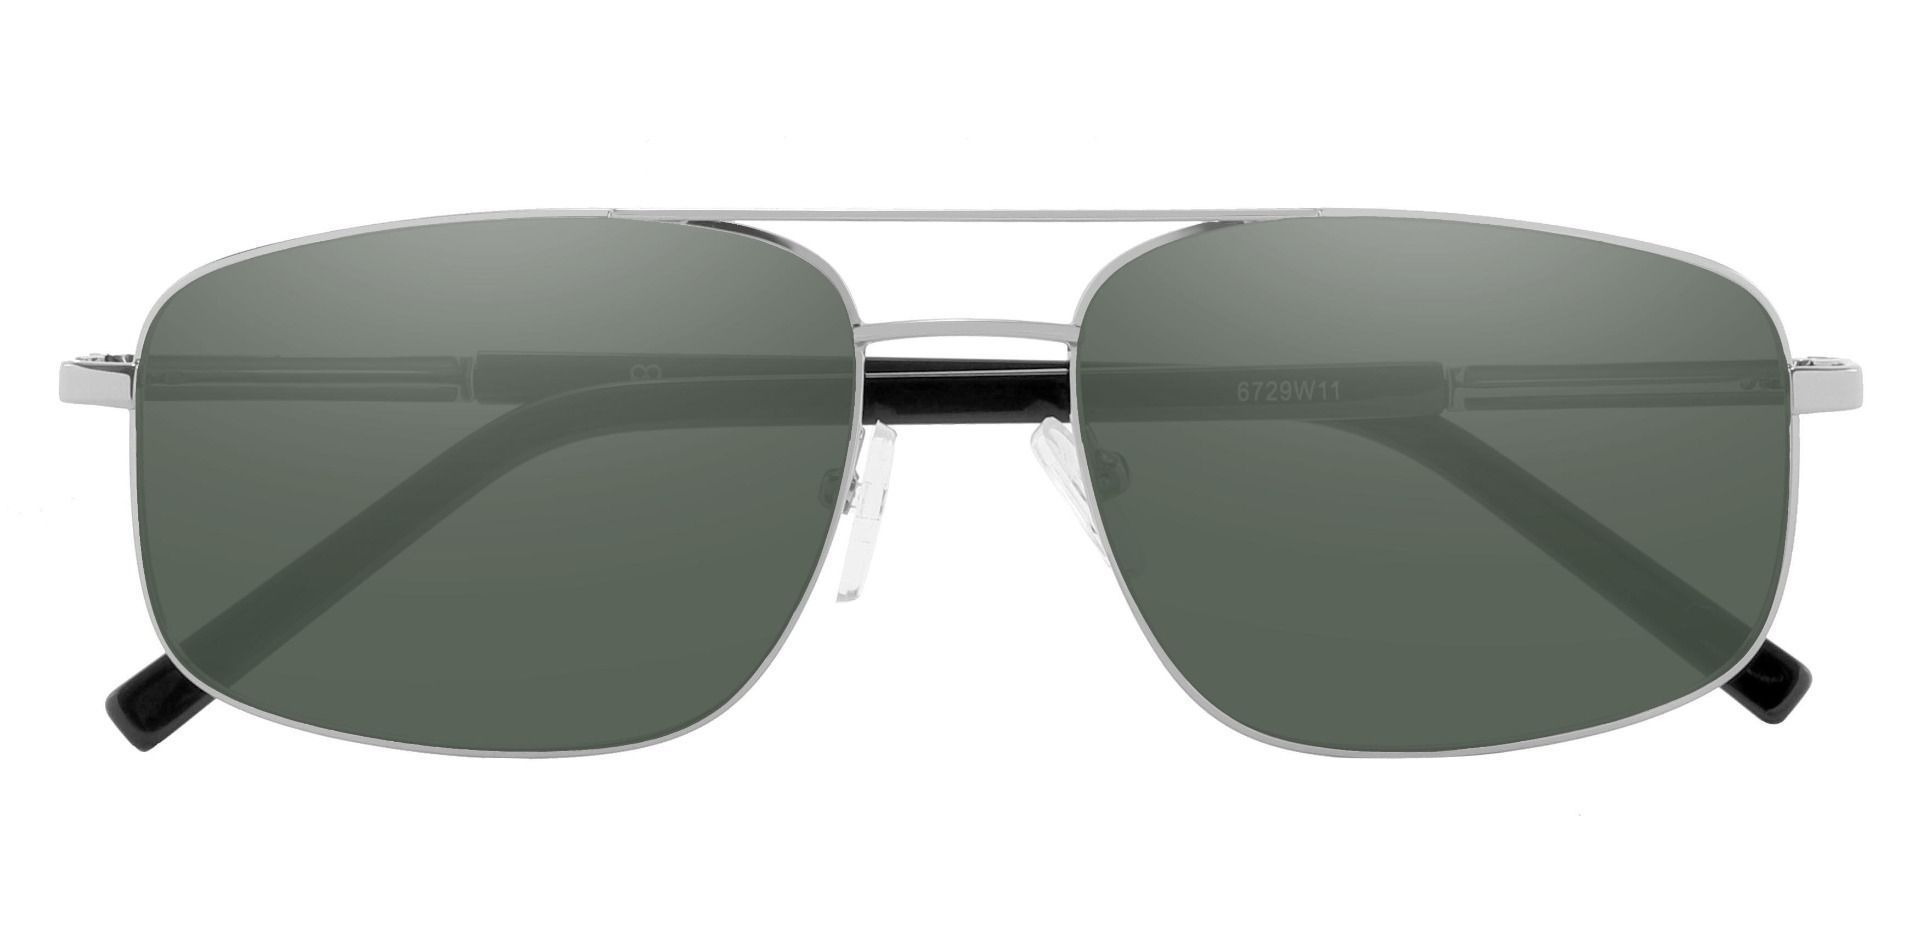 Davenport Aviator Prescription Sunglasses - Silver Frame With Green Lenses